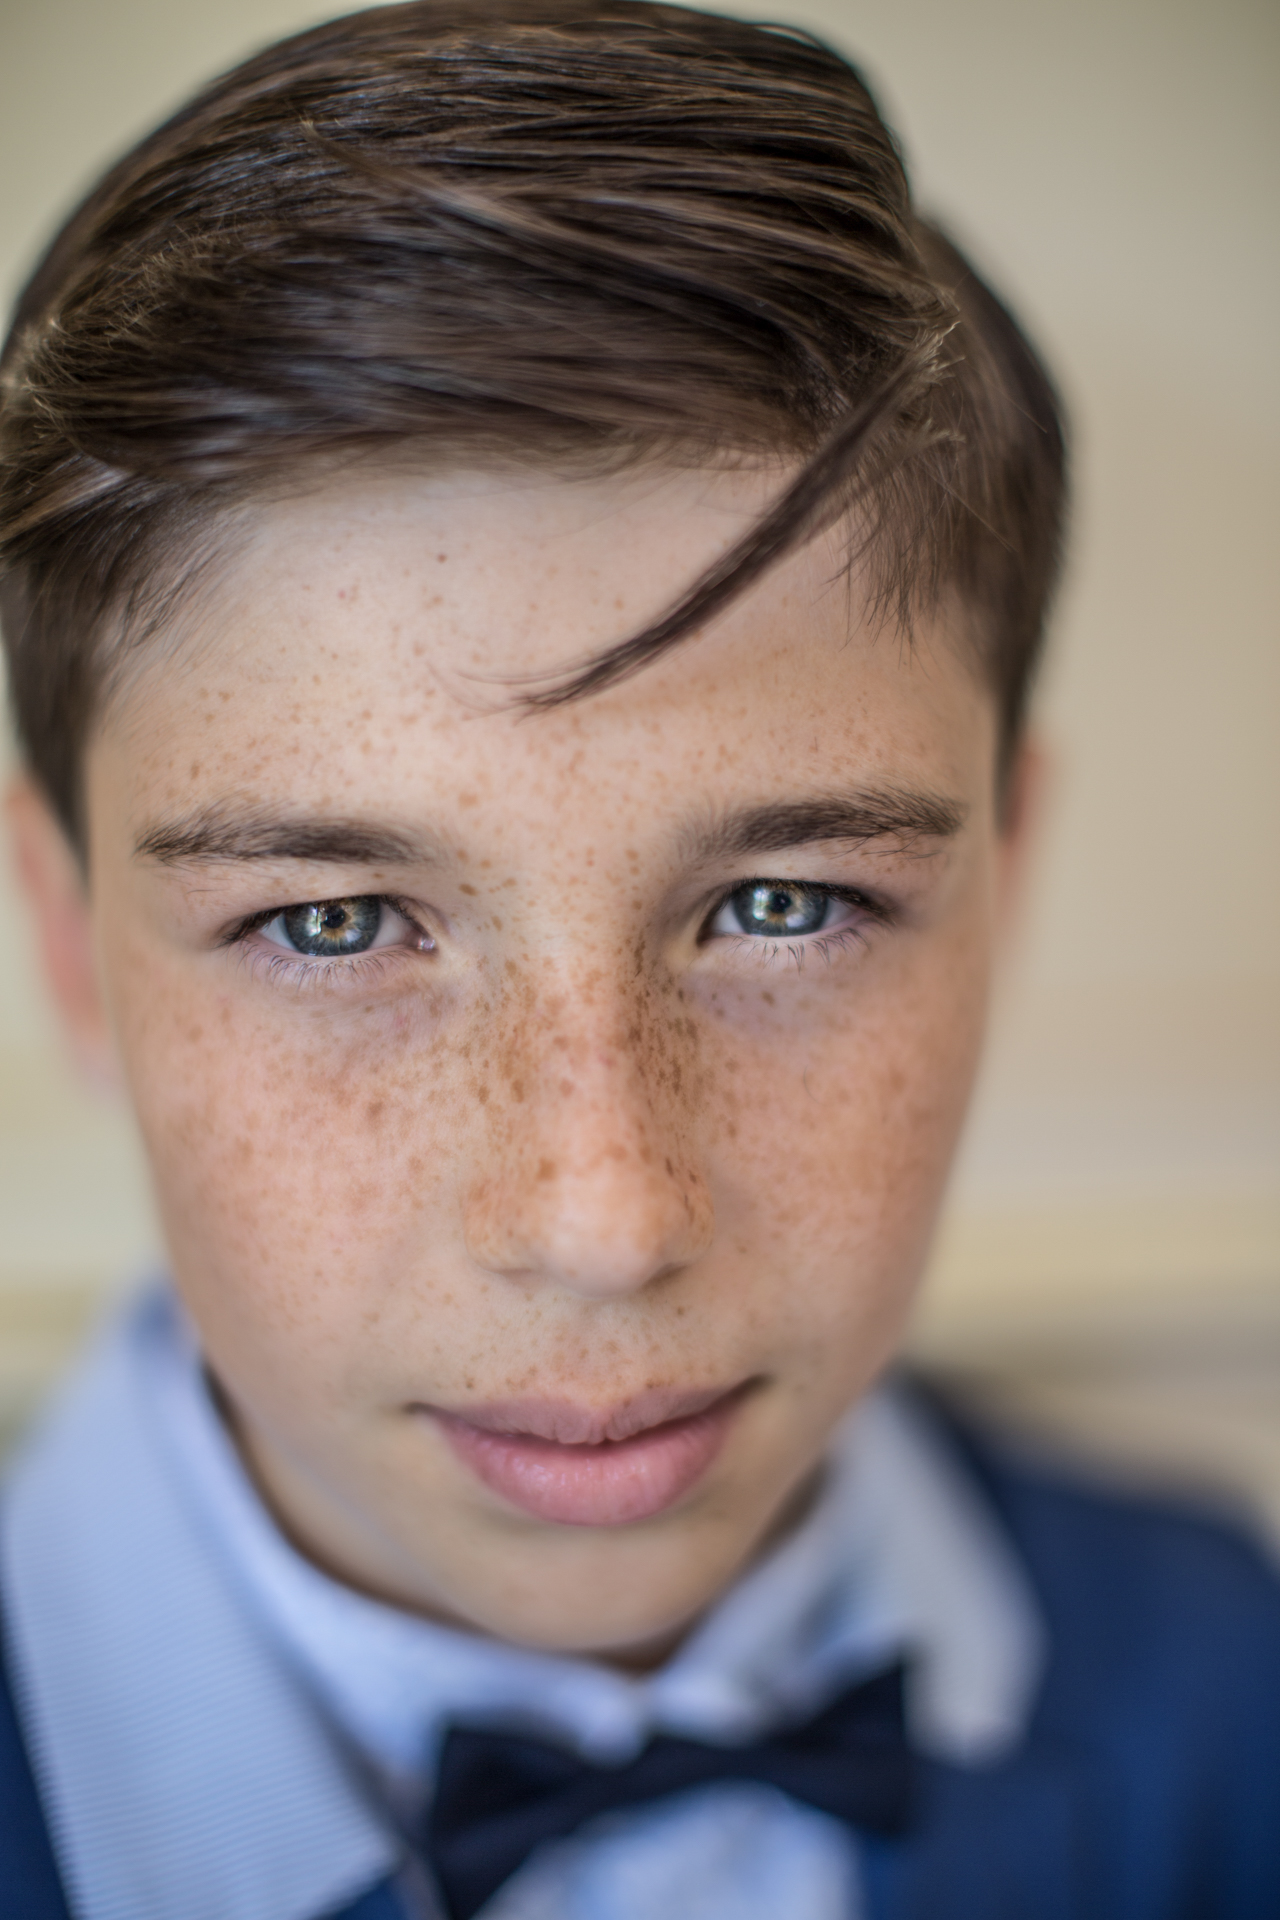 a boy's intense look portrait